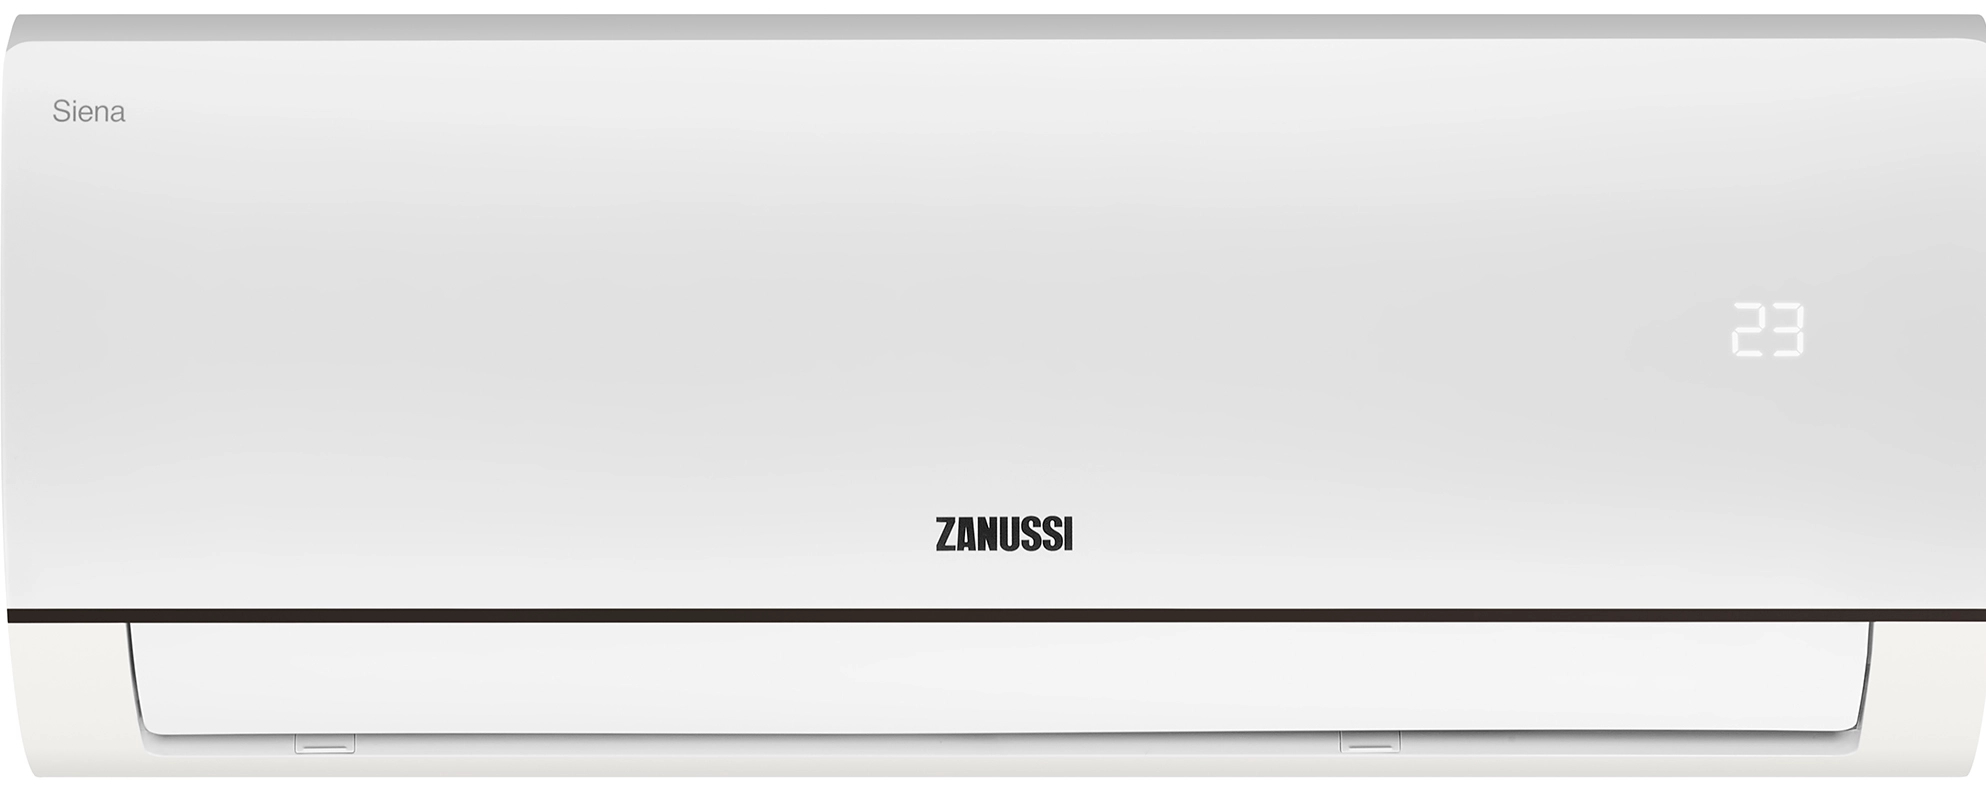 продаём Zanussi Siena ZACS-09 HS/A21/N1 в Украине - фото 4